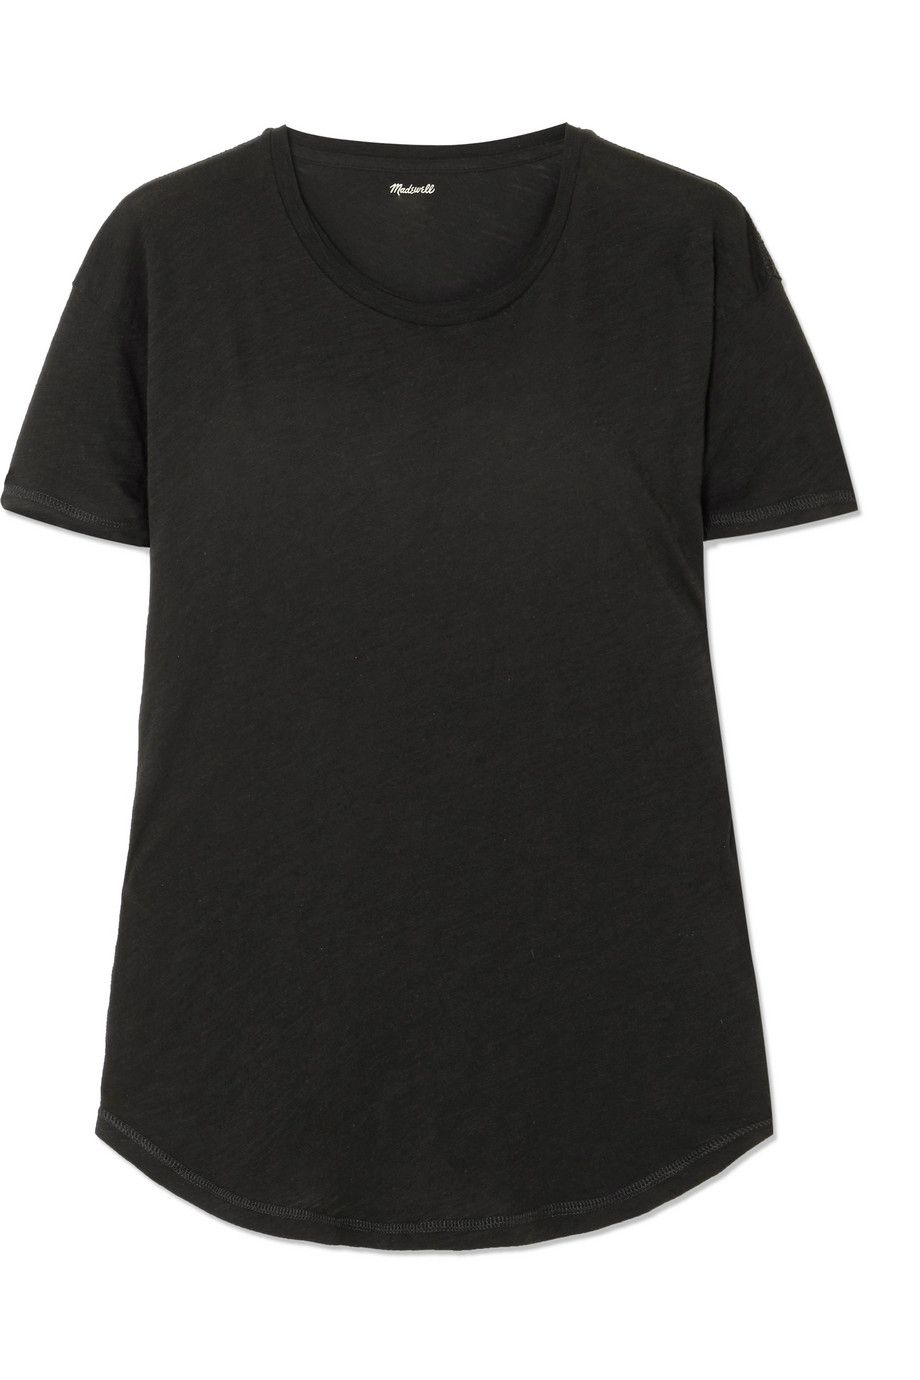 Visible-Stitch Black T-Shirt